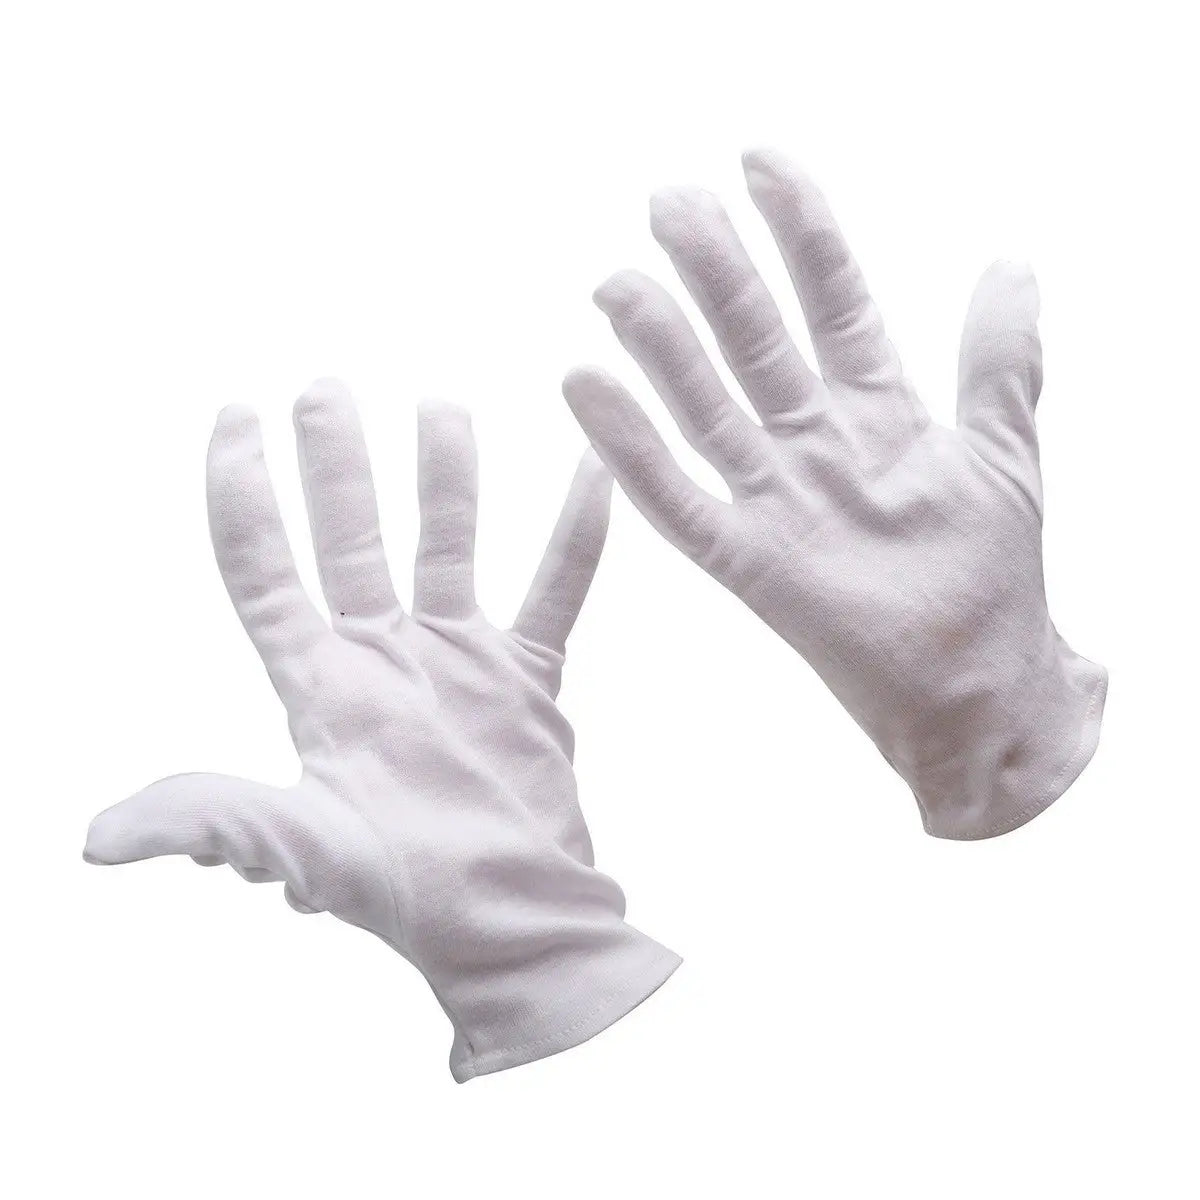 Add on accessories - Add batting inner gloves (adult) - BATS - ACCESSORIES